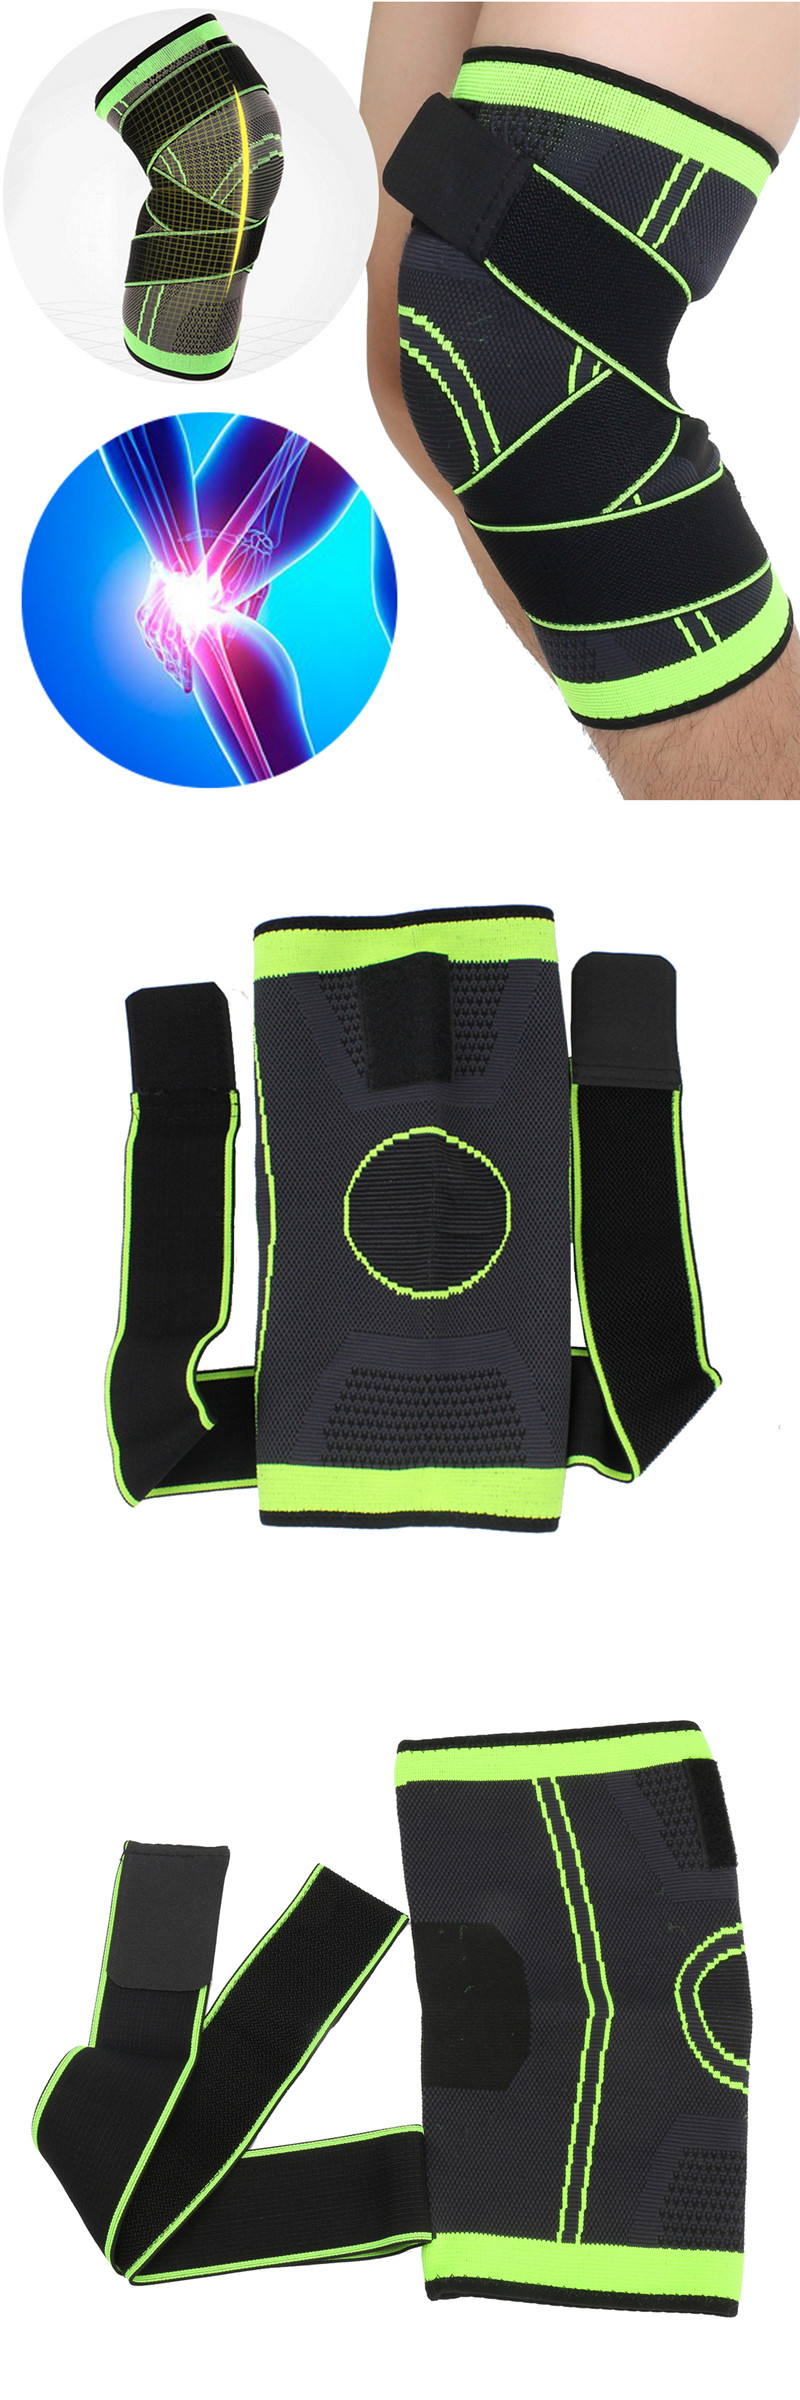 KALOAD-1Pcs-3D-Weaving-Knee-Brace-Breathable-Sleeve-Support-for-Running-Jogging-Sports-1197639-1